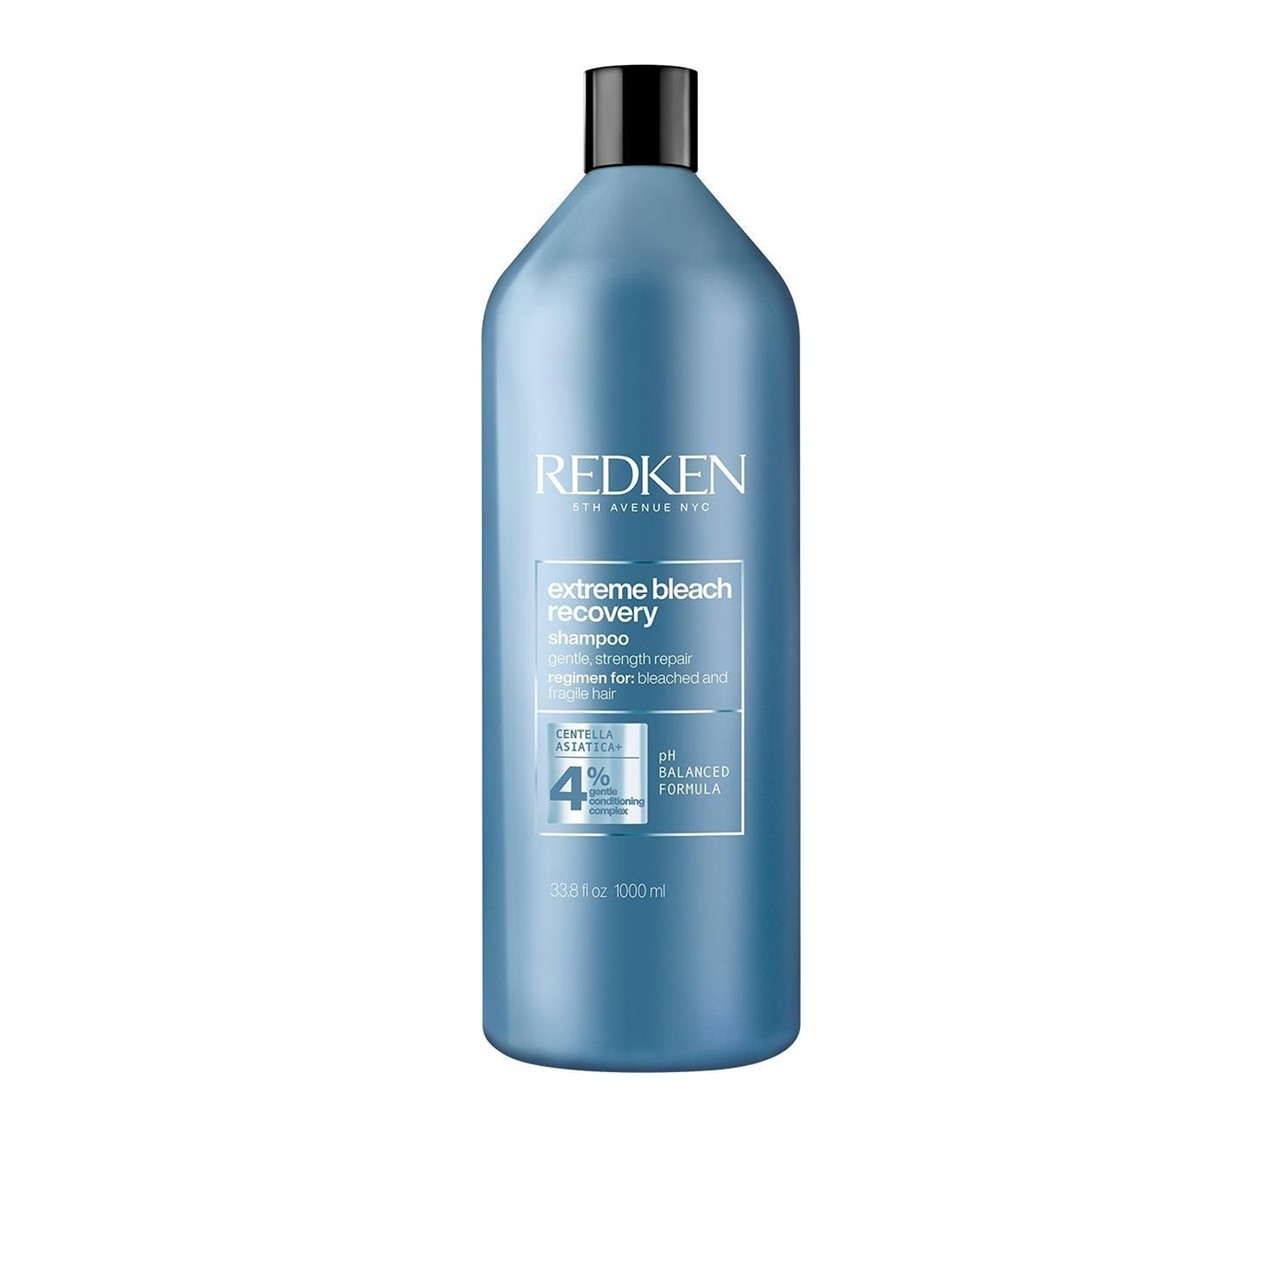 Redken Extreme Bleach Recovery Shampoo 1L (33.81fl oz)